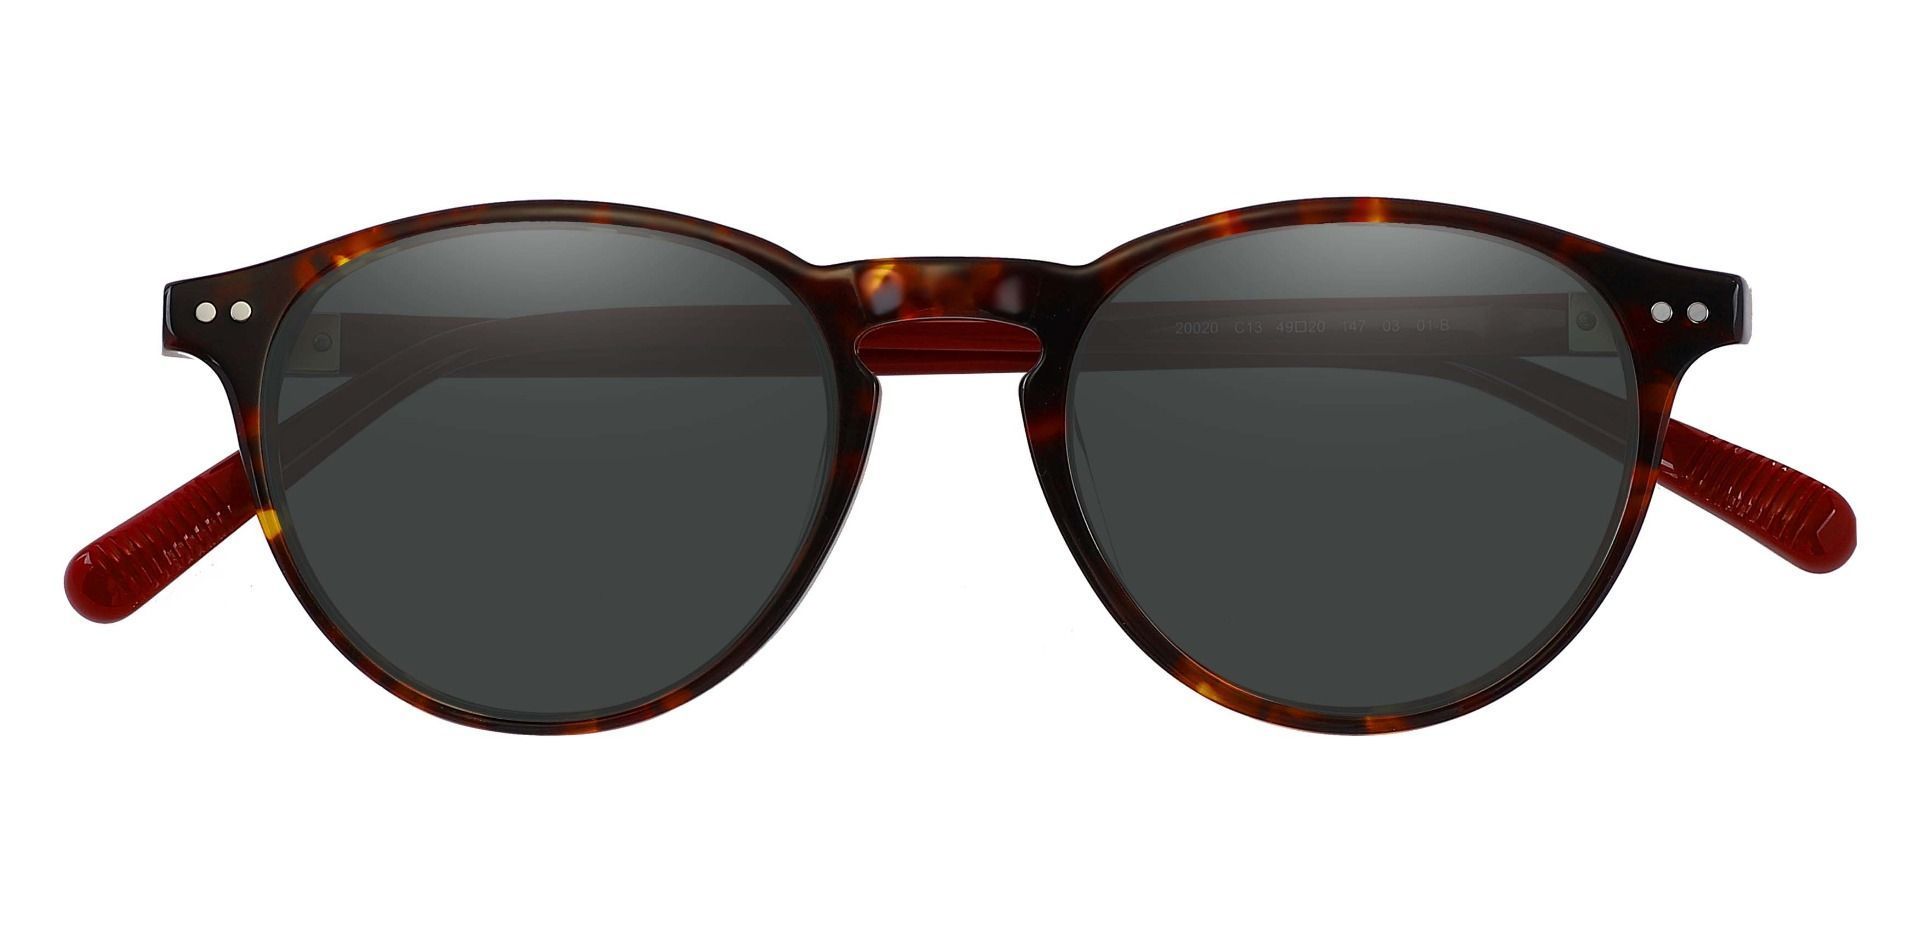 Monarch Oval Prescription Sunglasses - Tortoise Frame With Gray Lenses